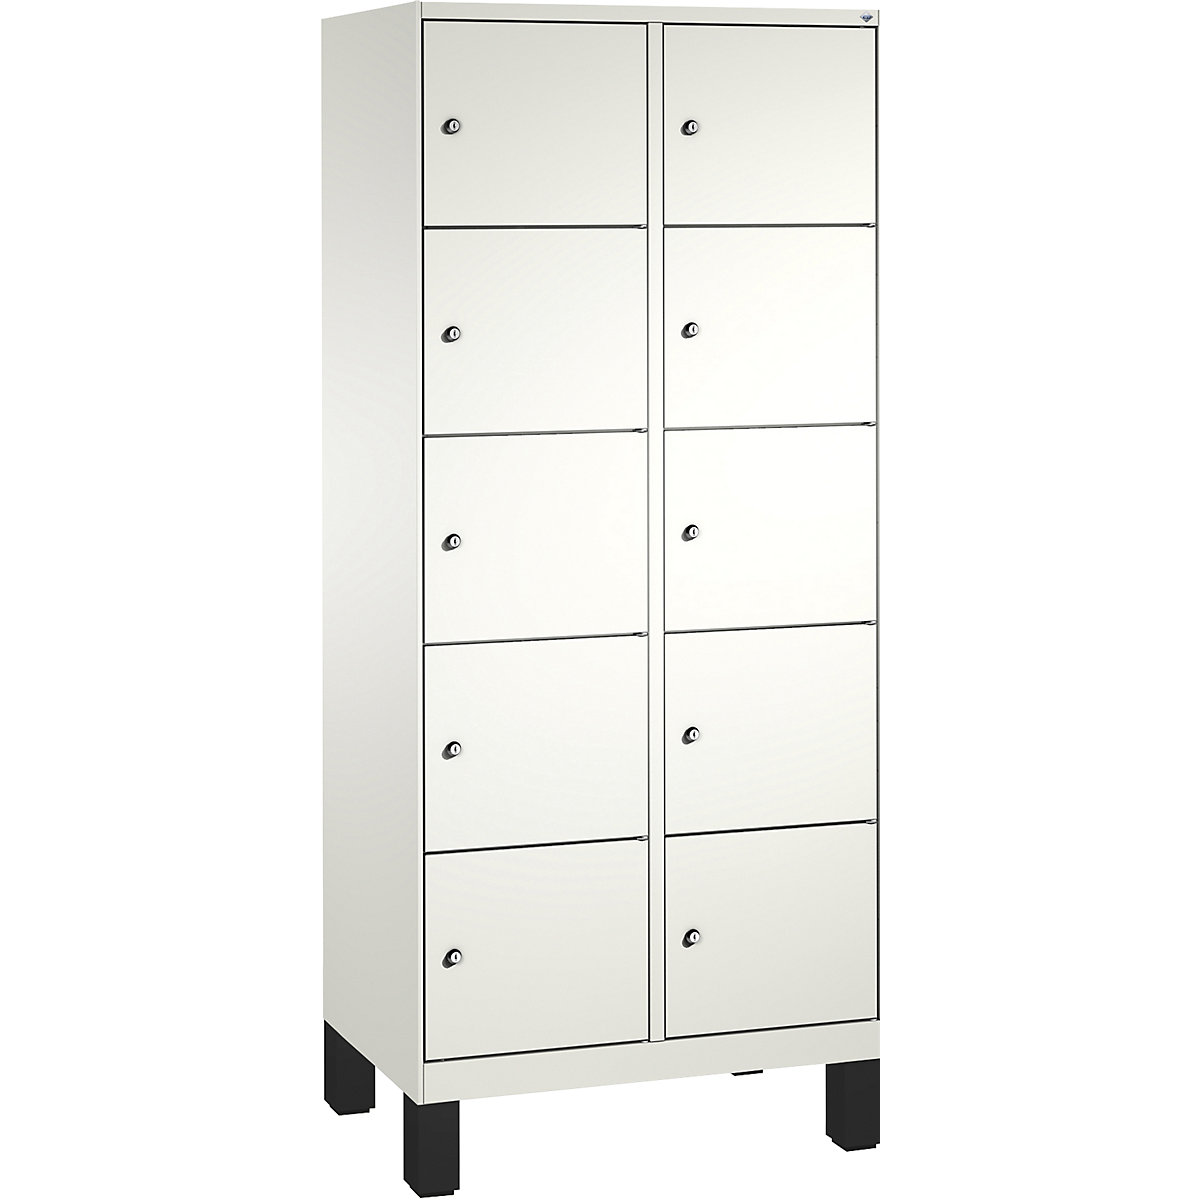 EVOLO locker unit, with feet – C+P, 2 compartments, 5 shelf compartments each, compartment width 400 mm, traffic white / traffic white-3